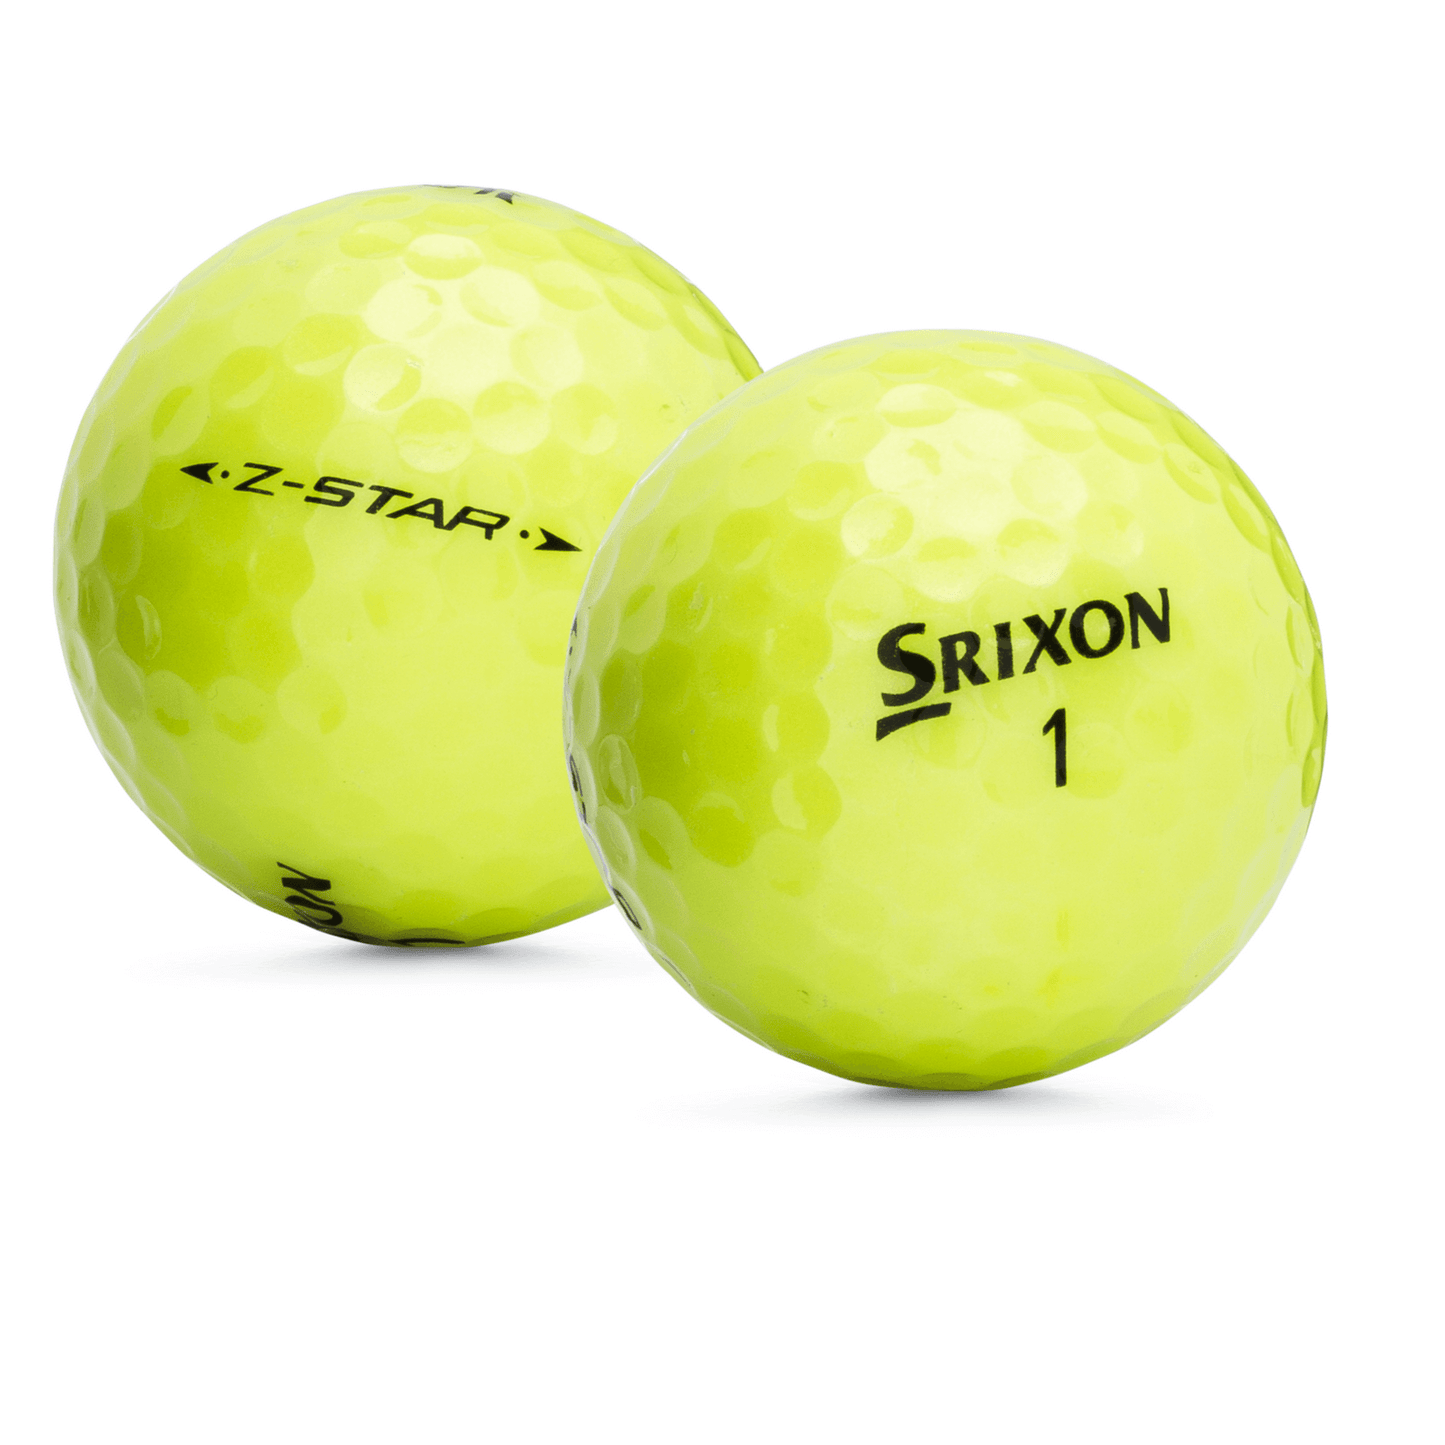 USED Srixon Z-Star SL Yellow Golf Balls 96 Count